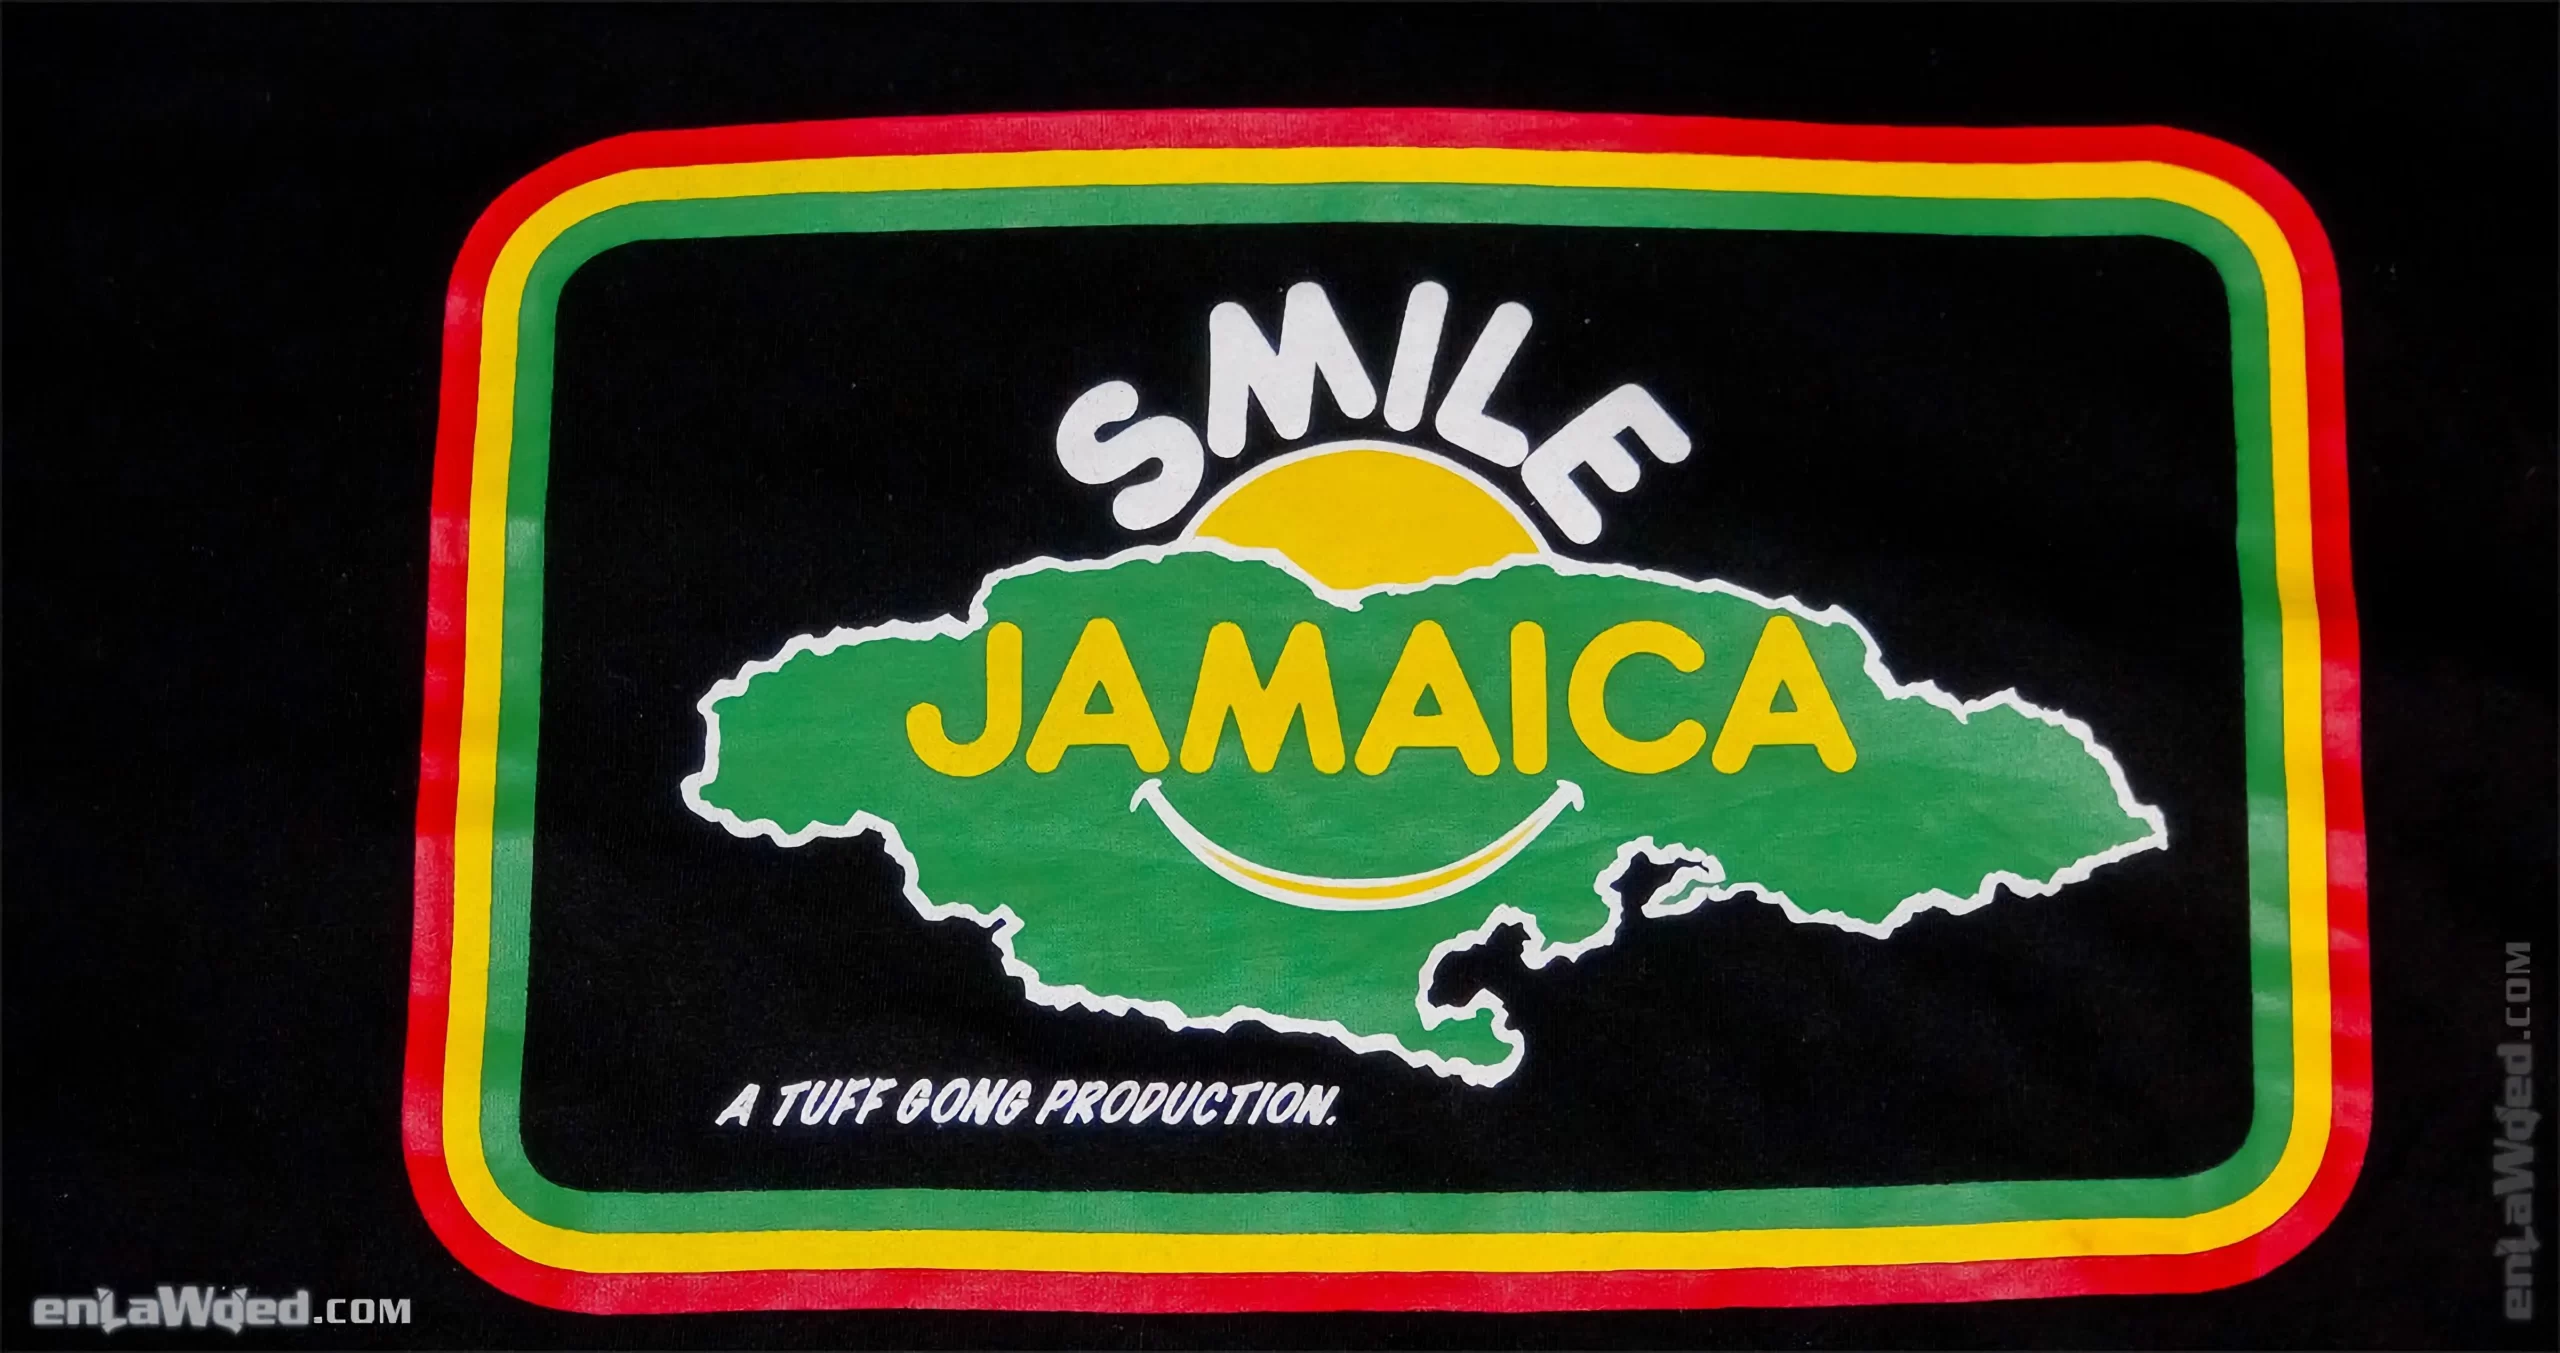 Men’s 2007 Bob Marley SMILE Tuff Gong T-Shirt by Adidas: Fine (EnLawded.com file #lmch69sp2byyr8ze7t5)